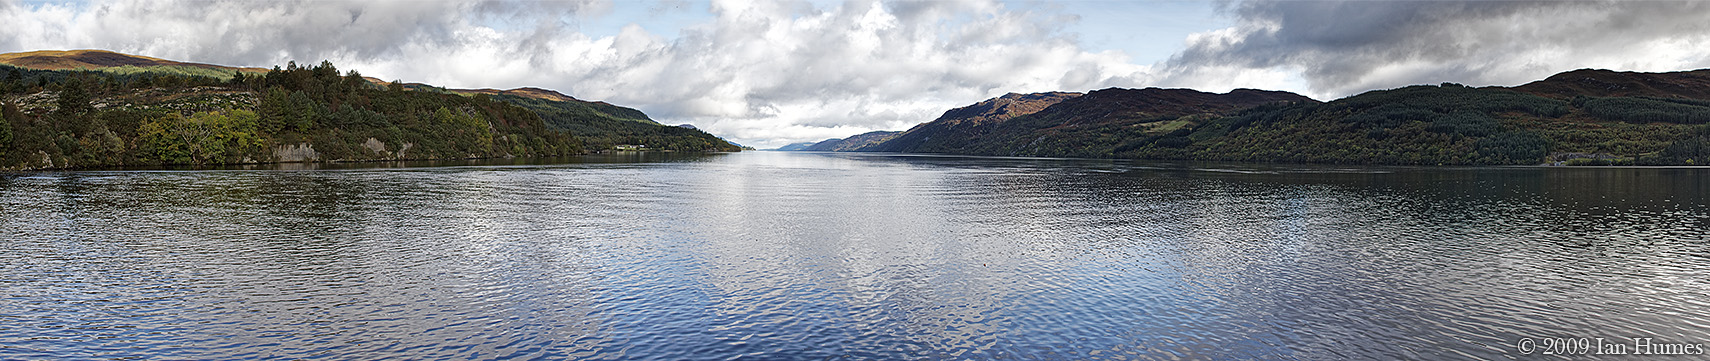 Loch Ness - Scottish Highlands